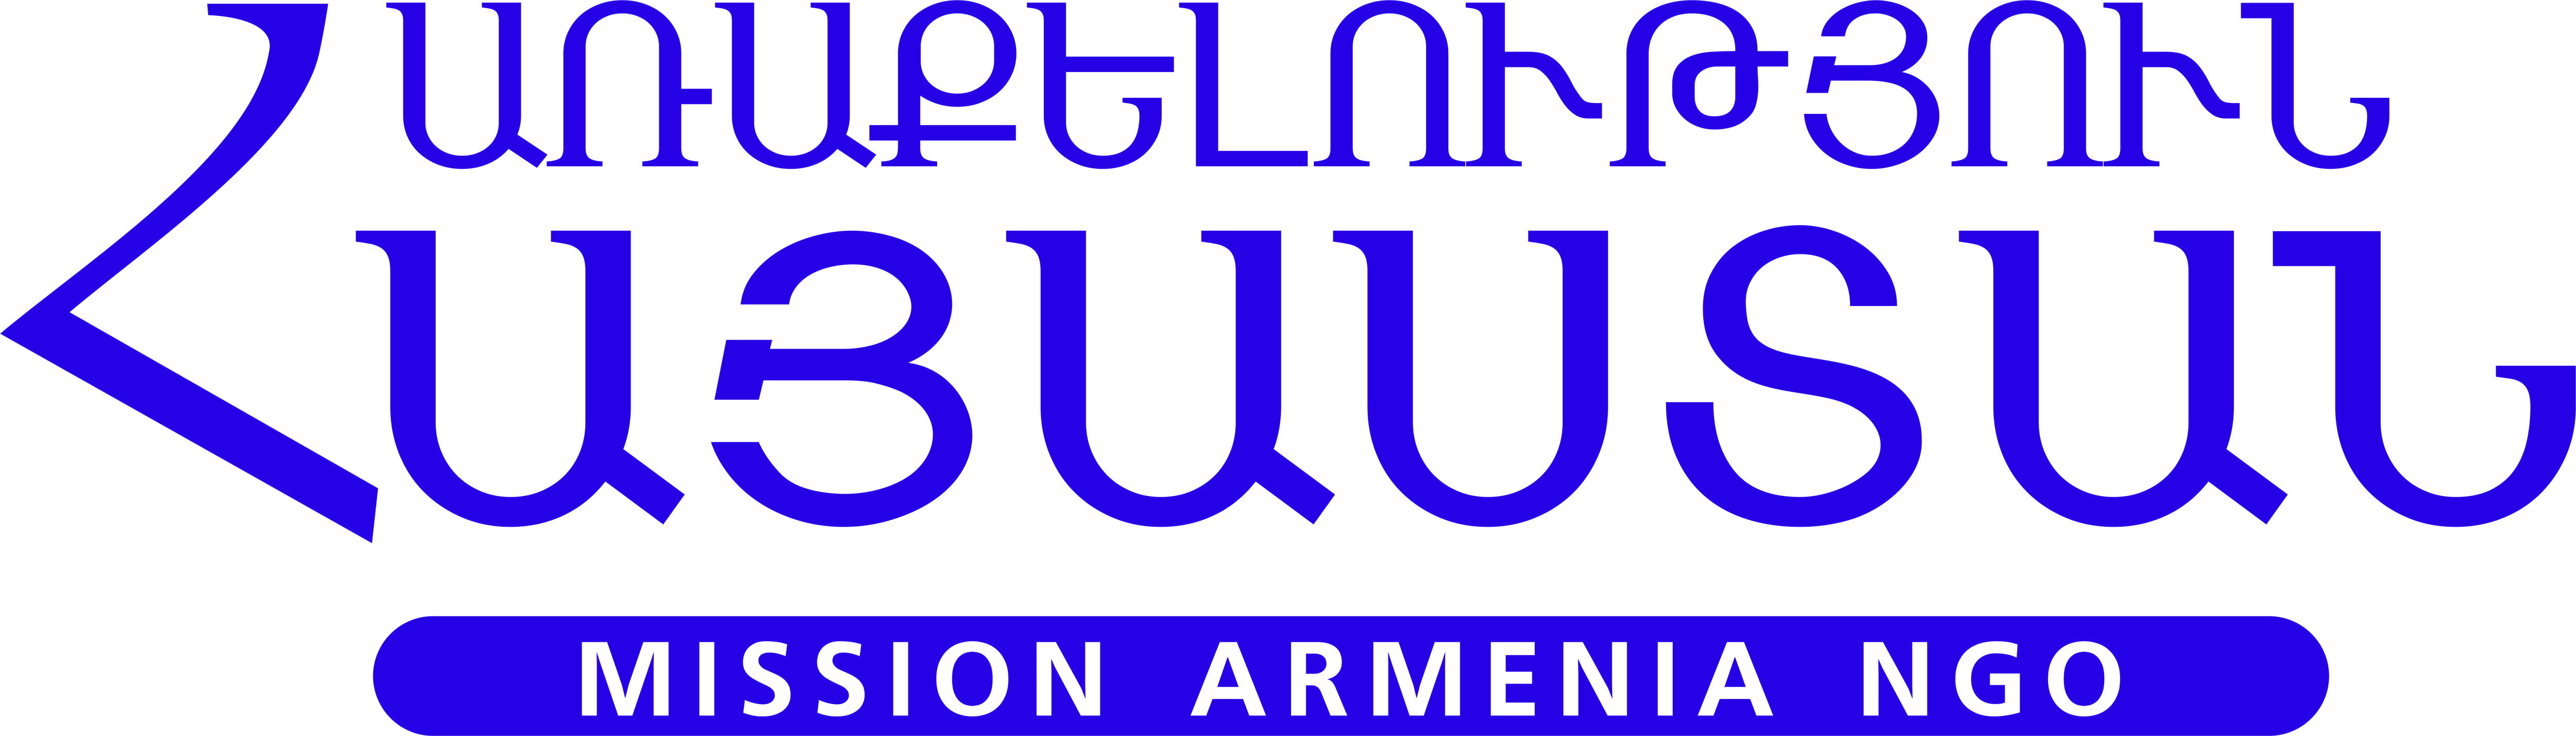 Mission Armenia NGO